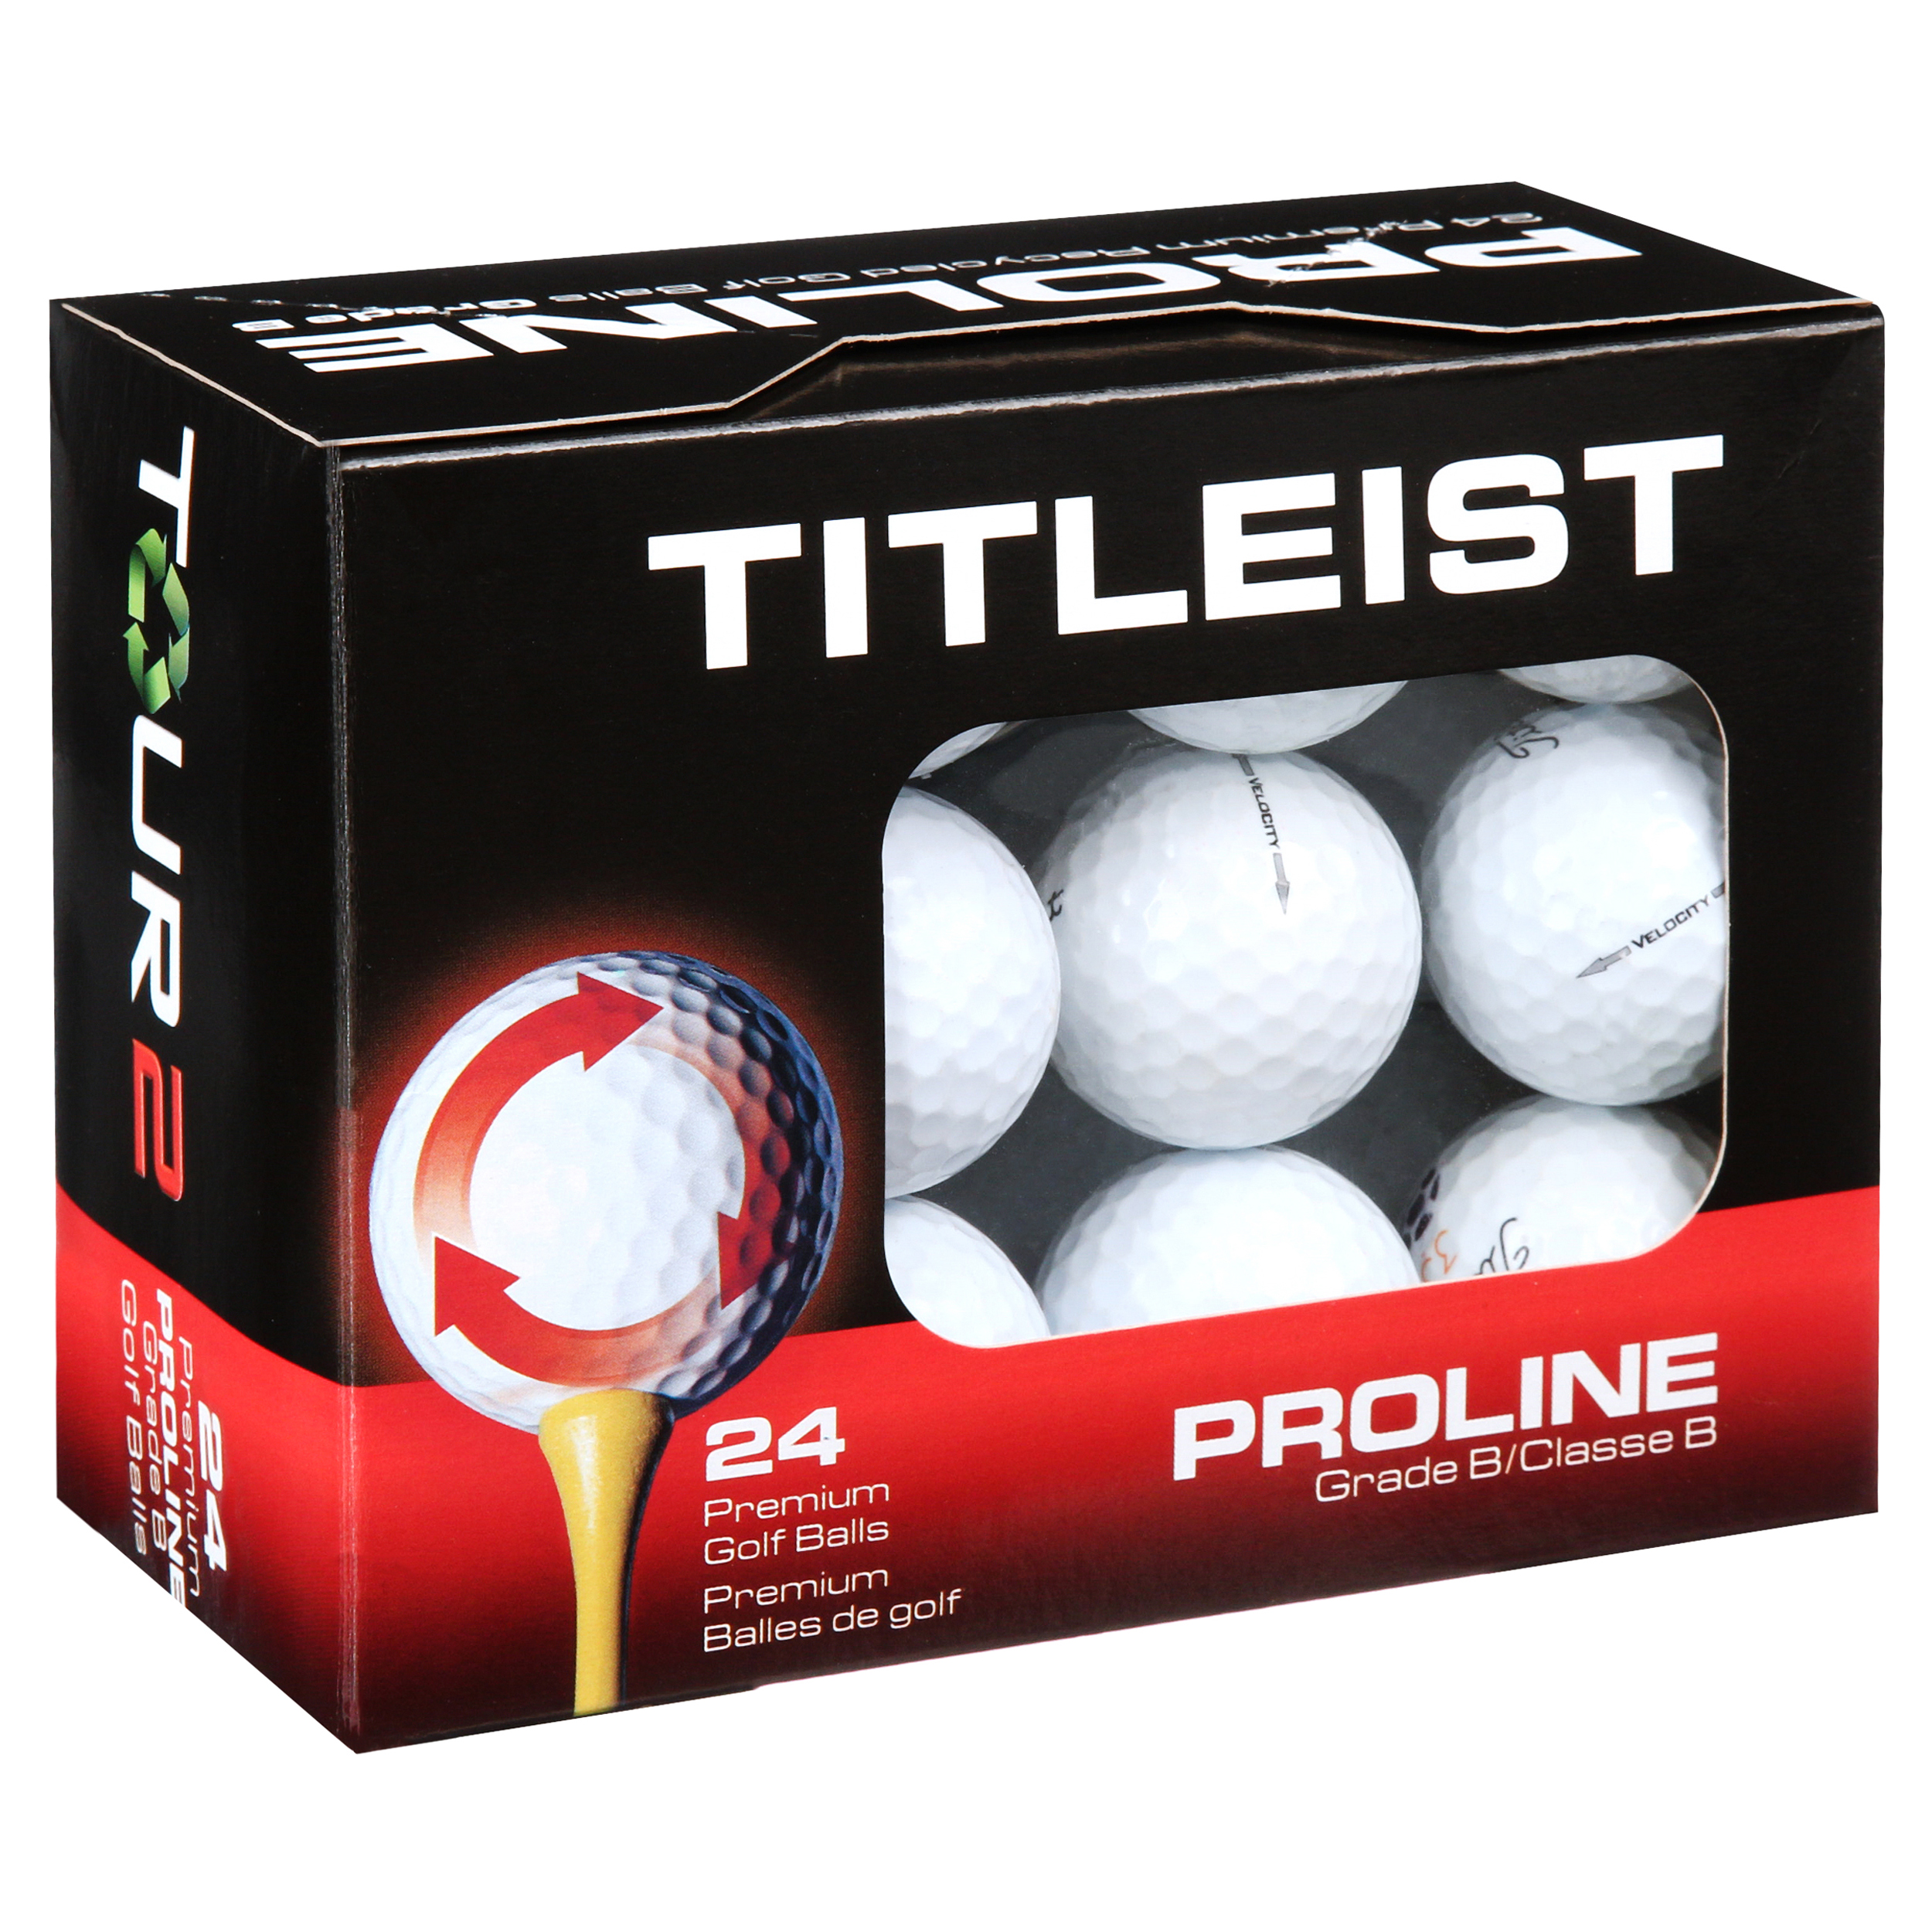 Titleist Proline Golf Balls, 24 Pack - image 5 of 9